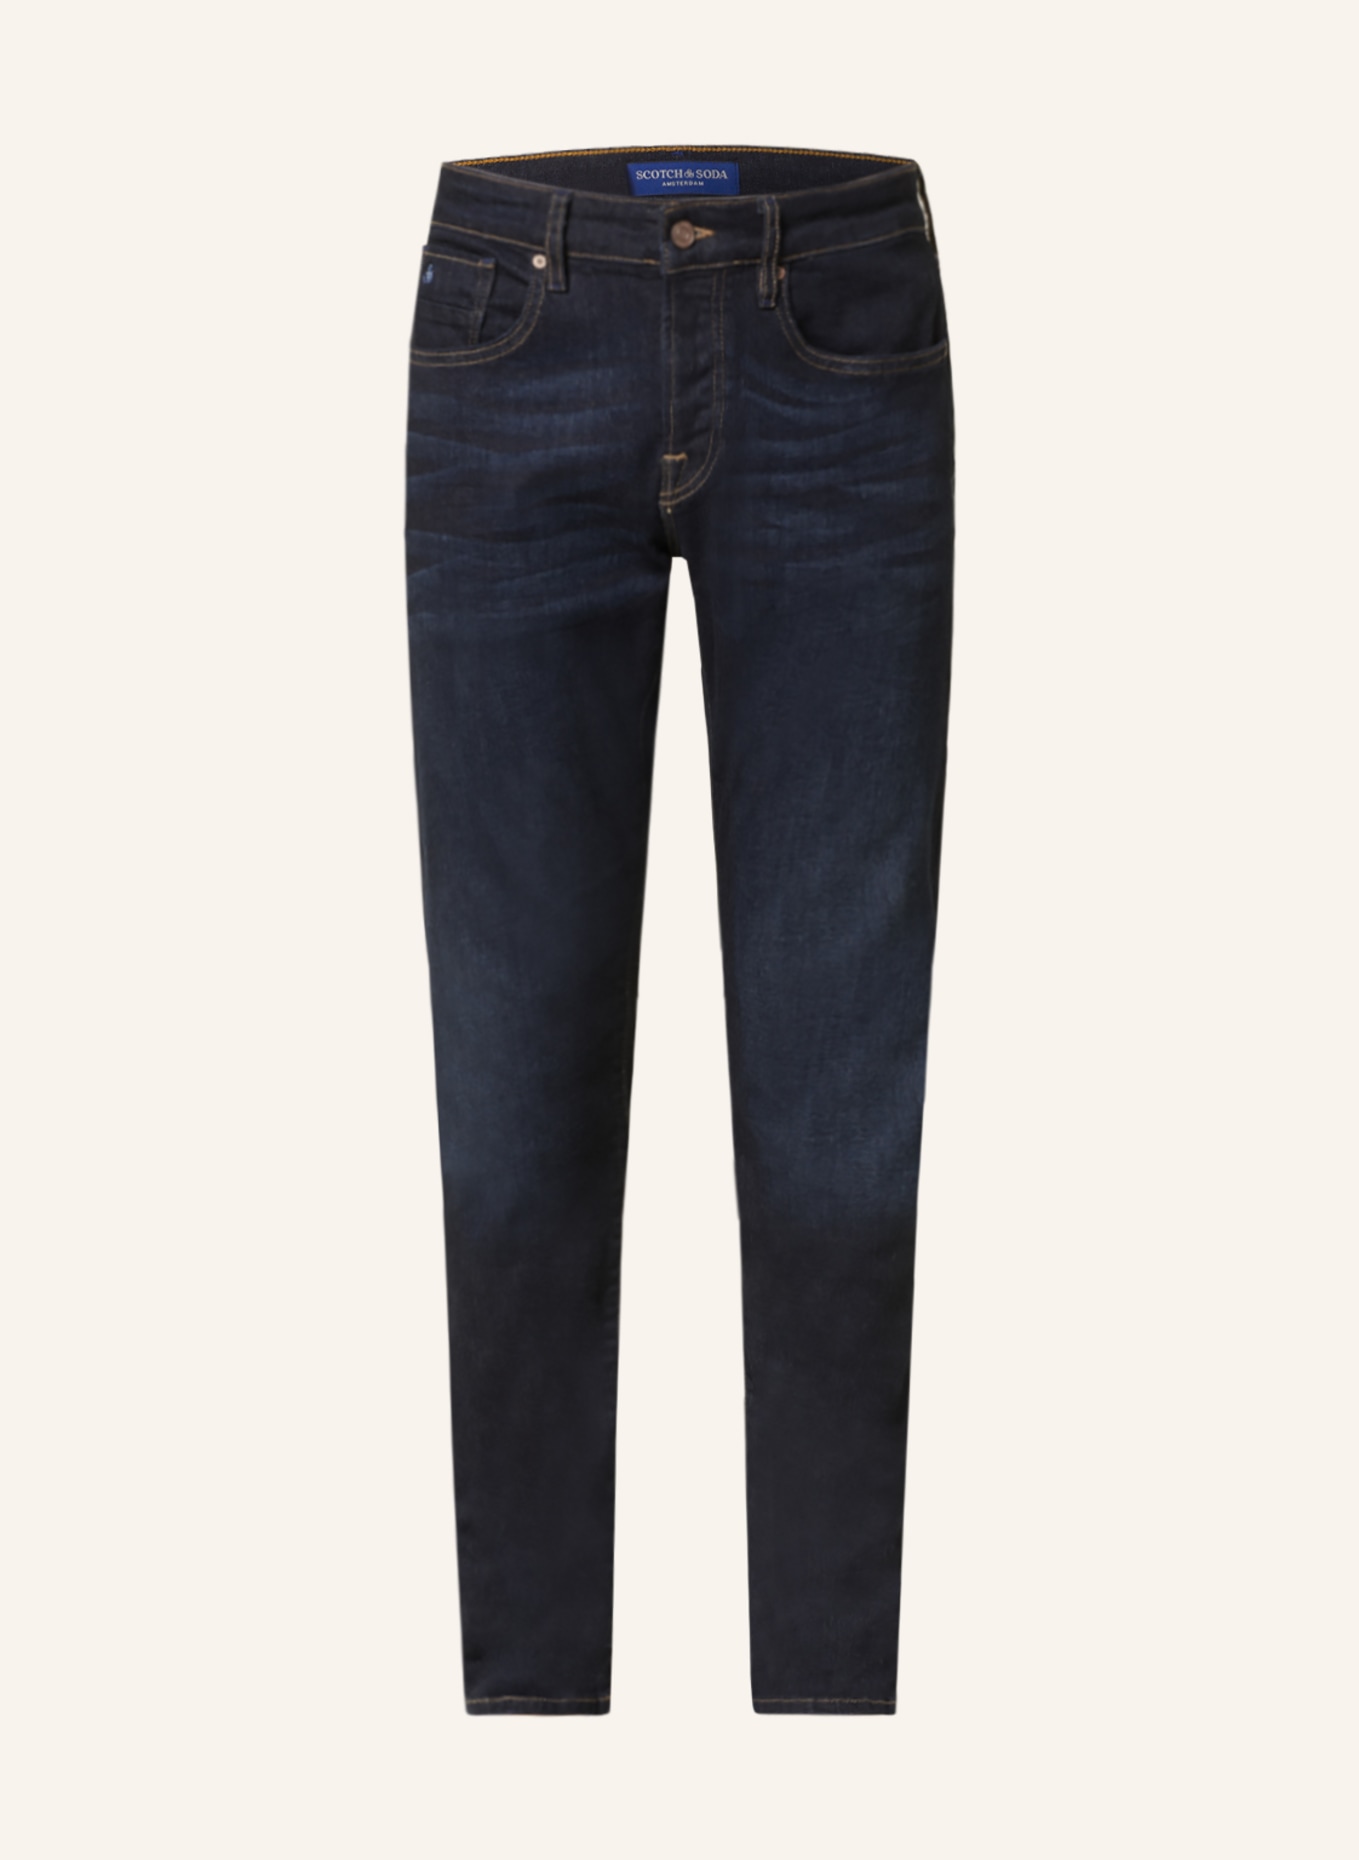 SCOTCH & SODA Jeans RALSTON Regular Slim Fit, Farbe: 1841 Beaten Back (Bild 1)